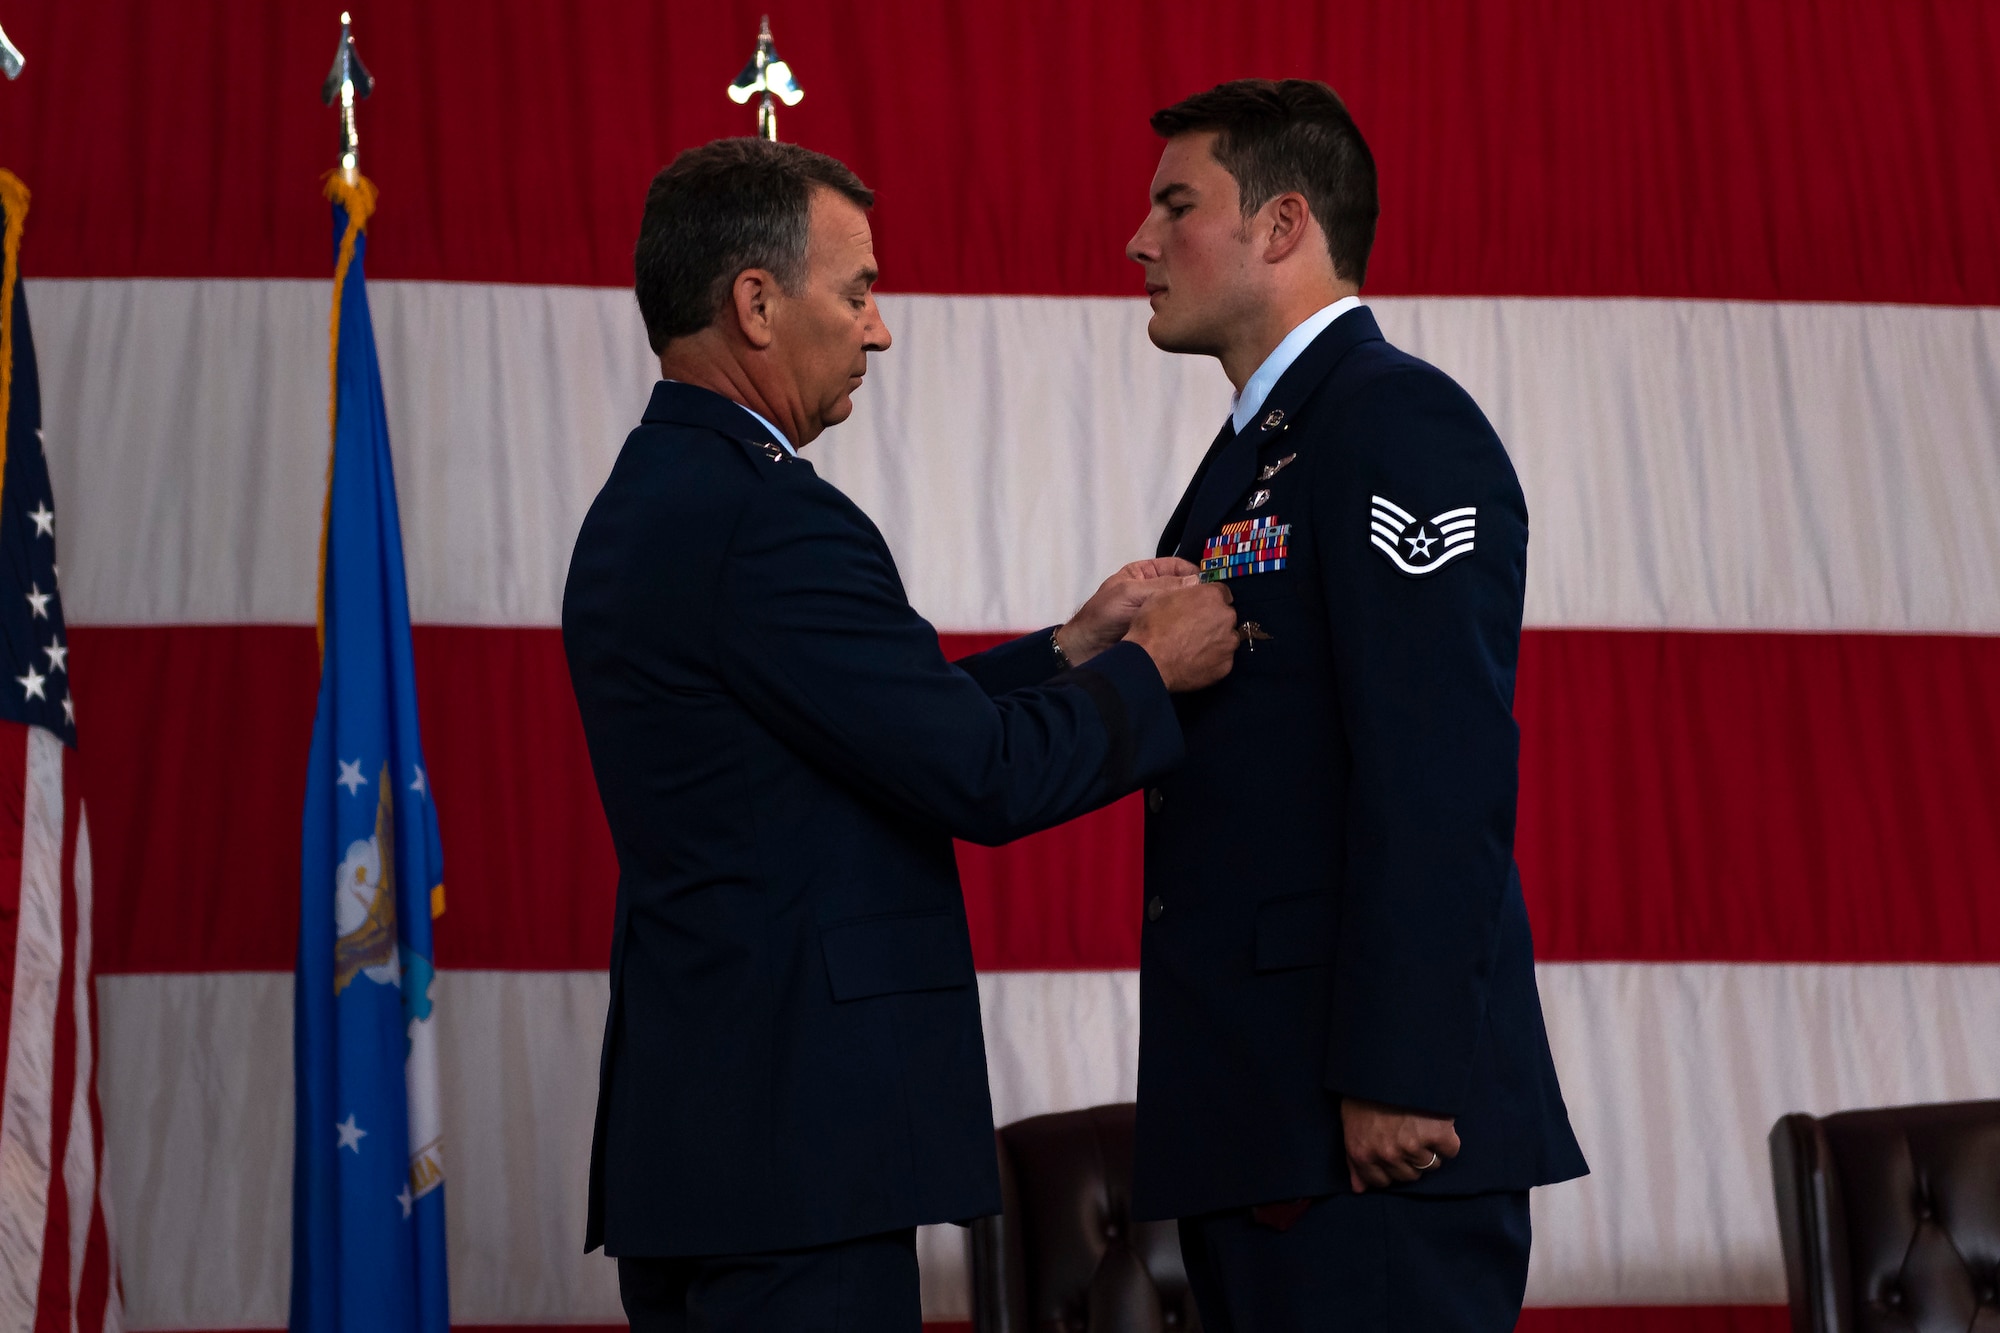 A photo of an Airman receiving a medal